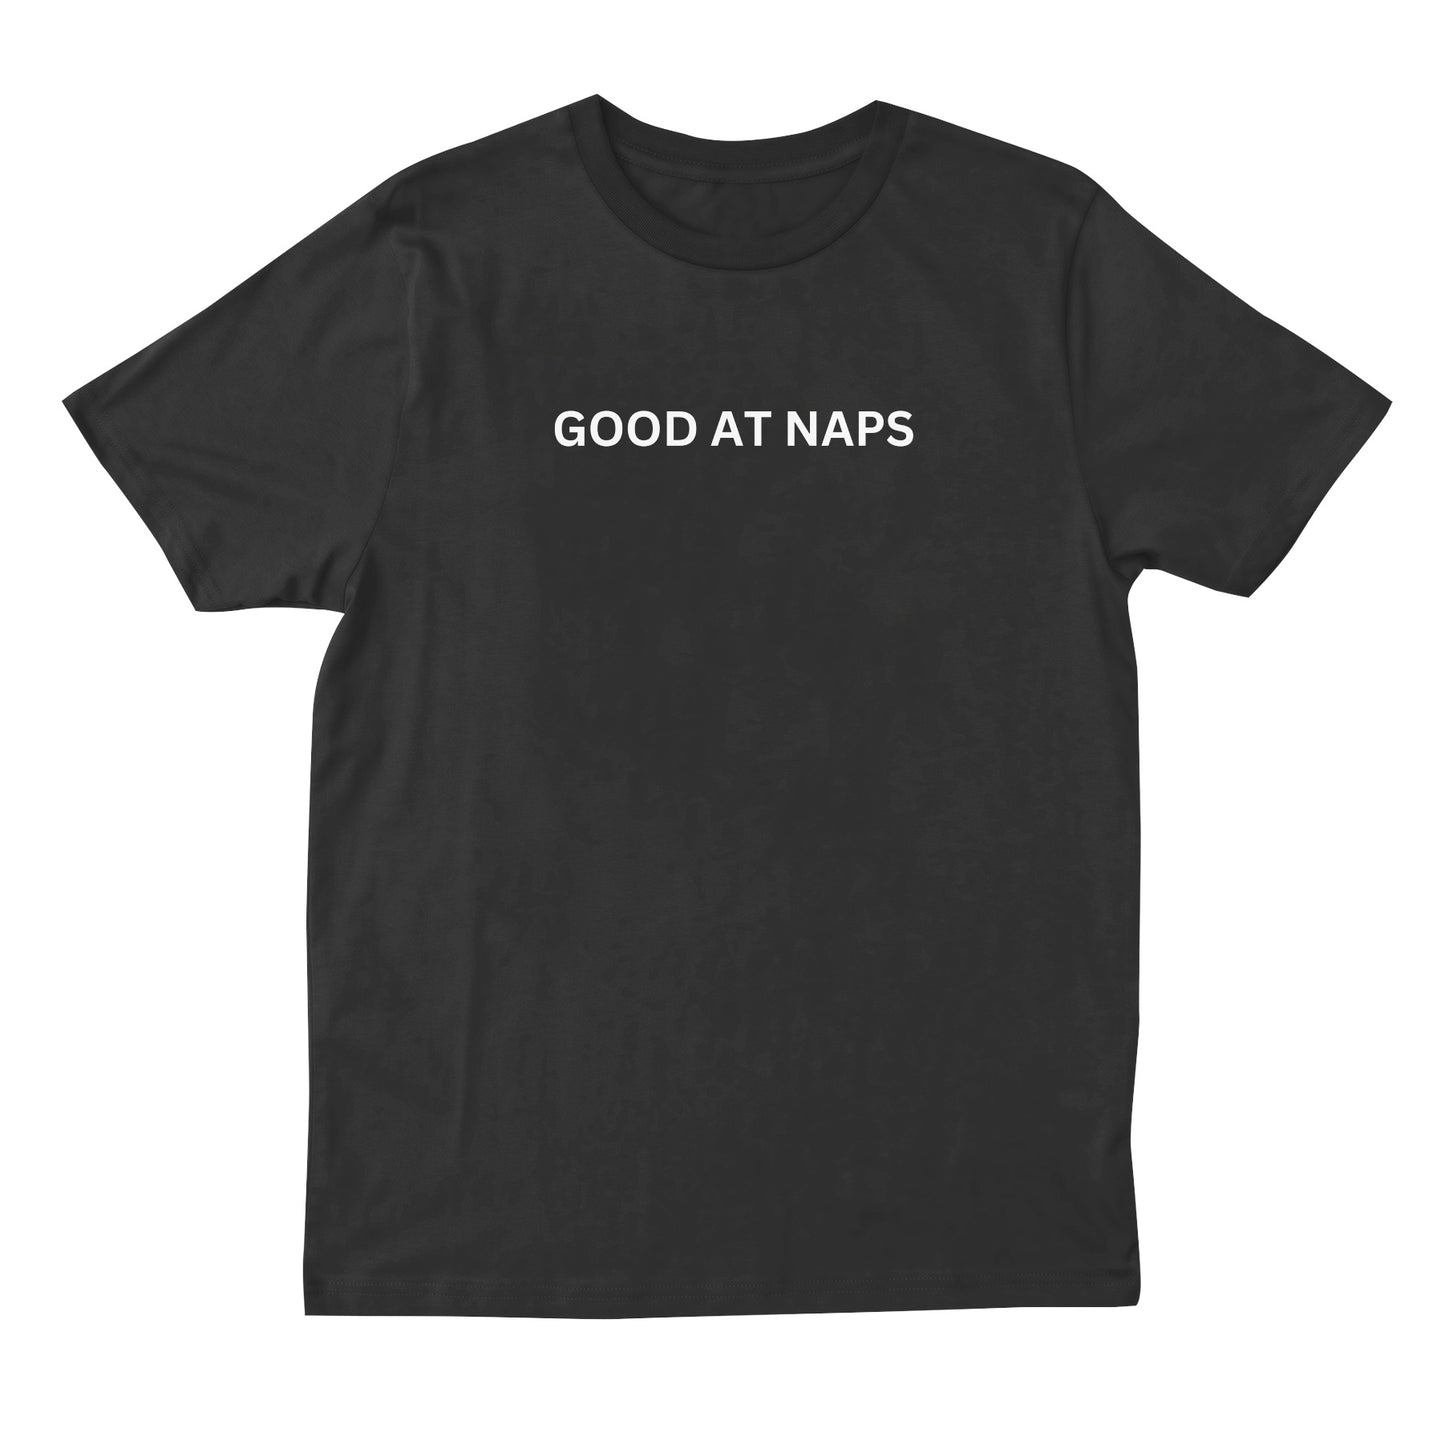 Naps T-shirt